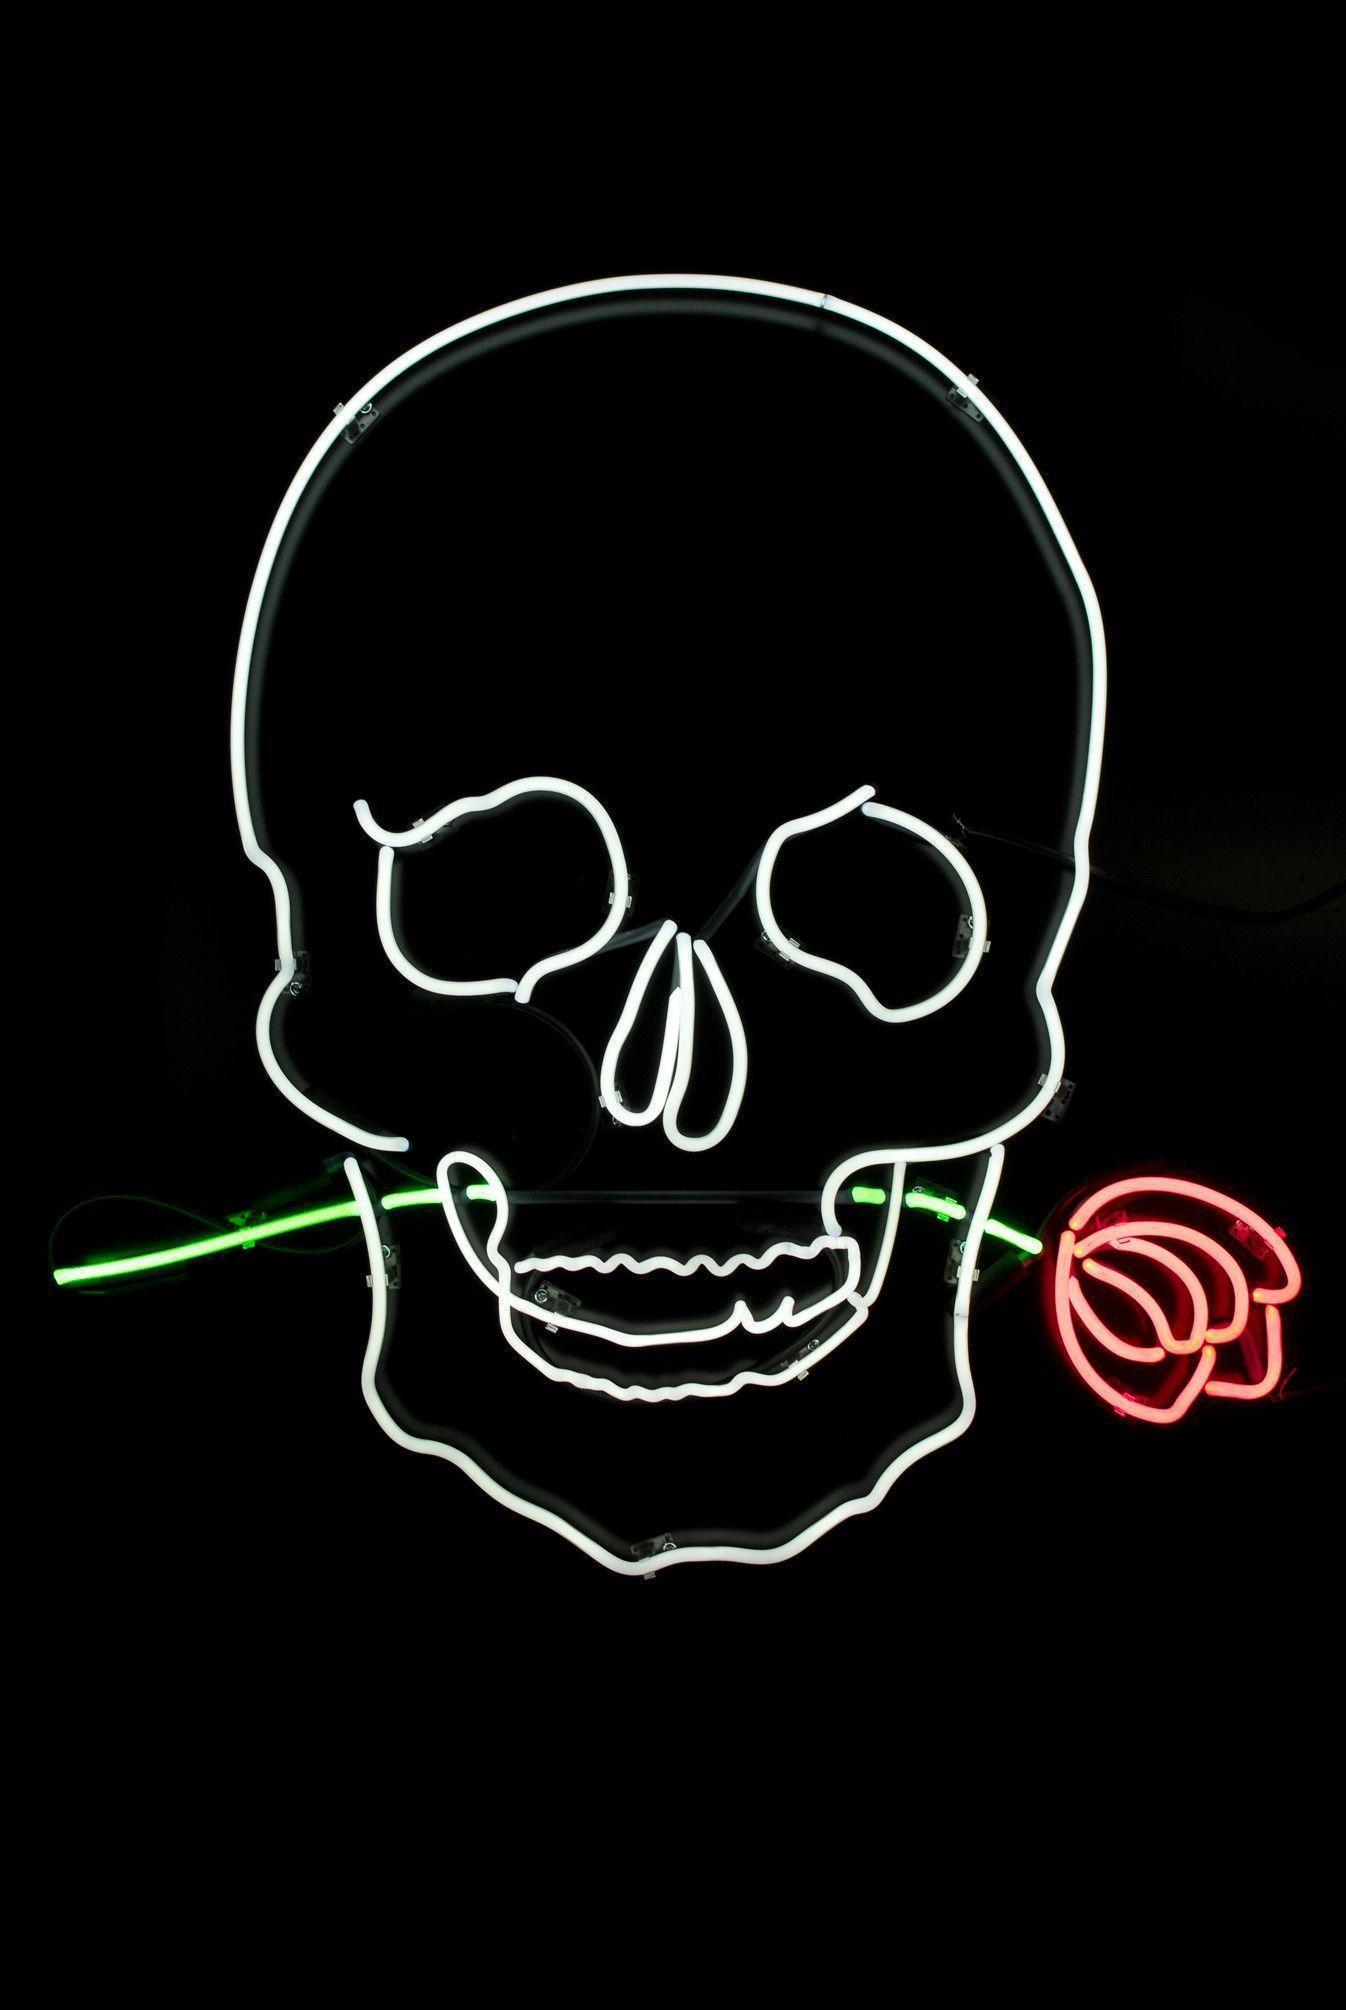 Black Skull with Rose Wallpaper Free Black Skull with Rose Background